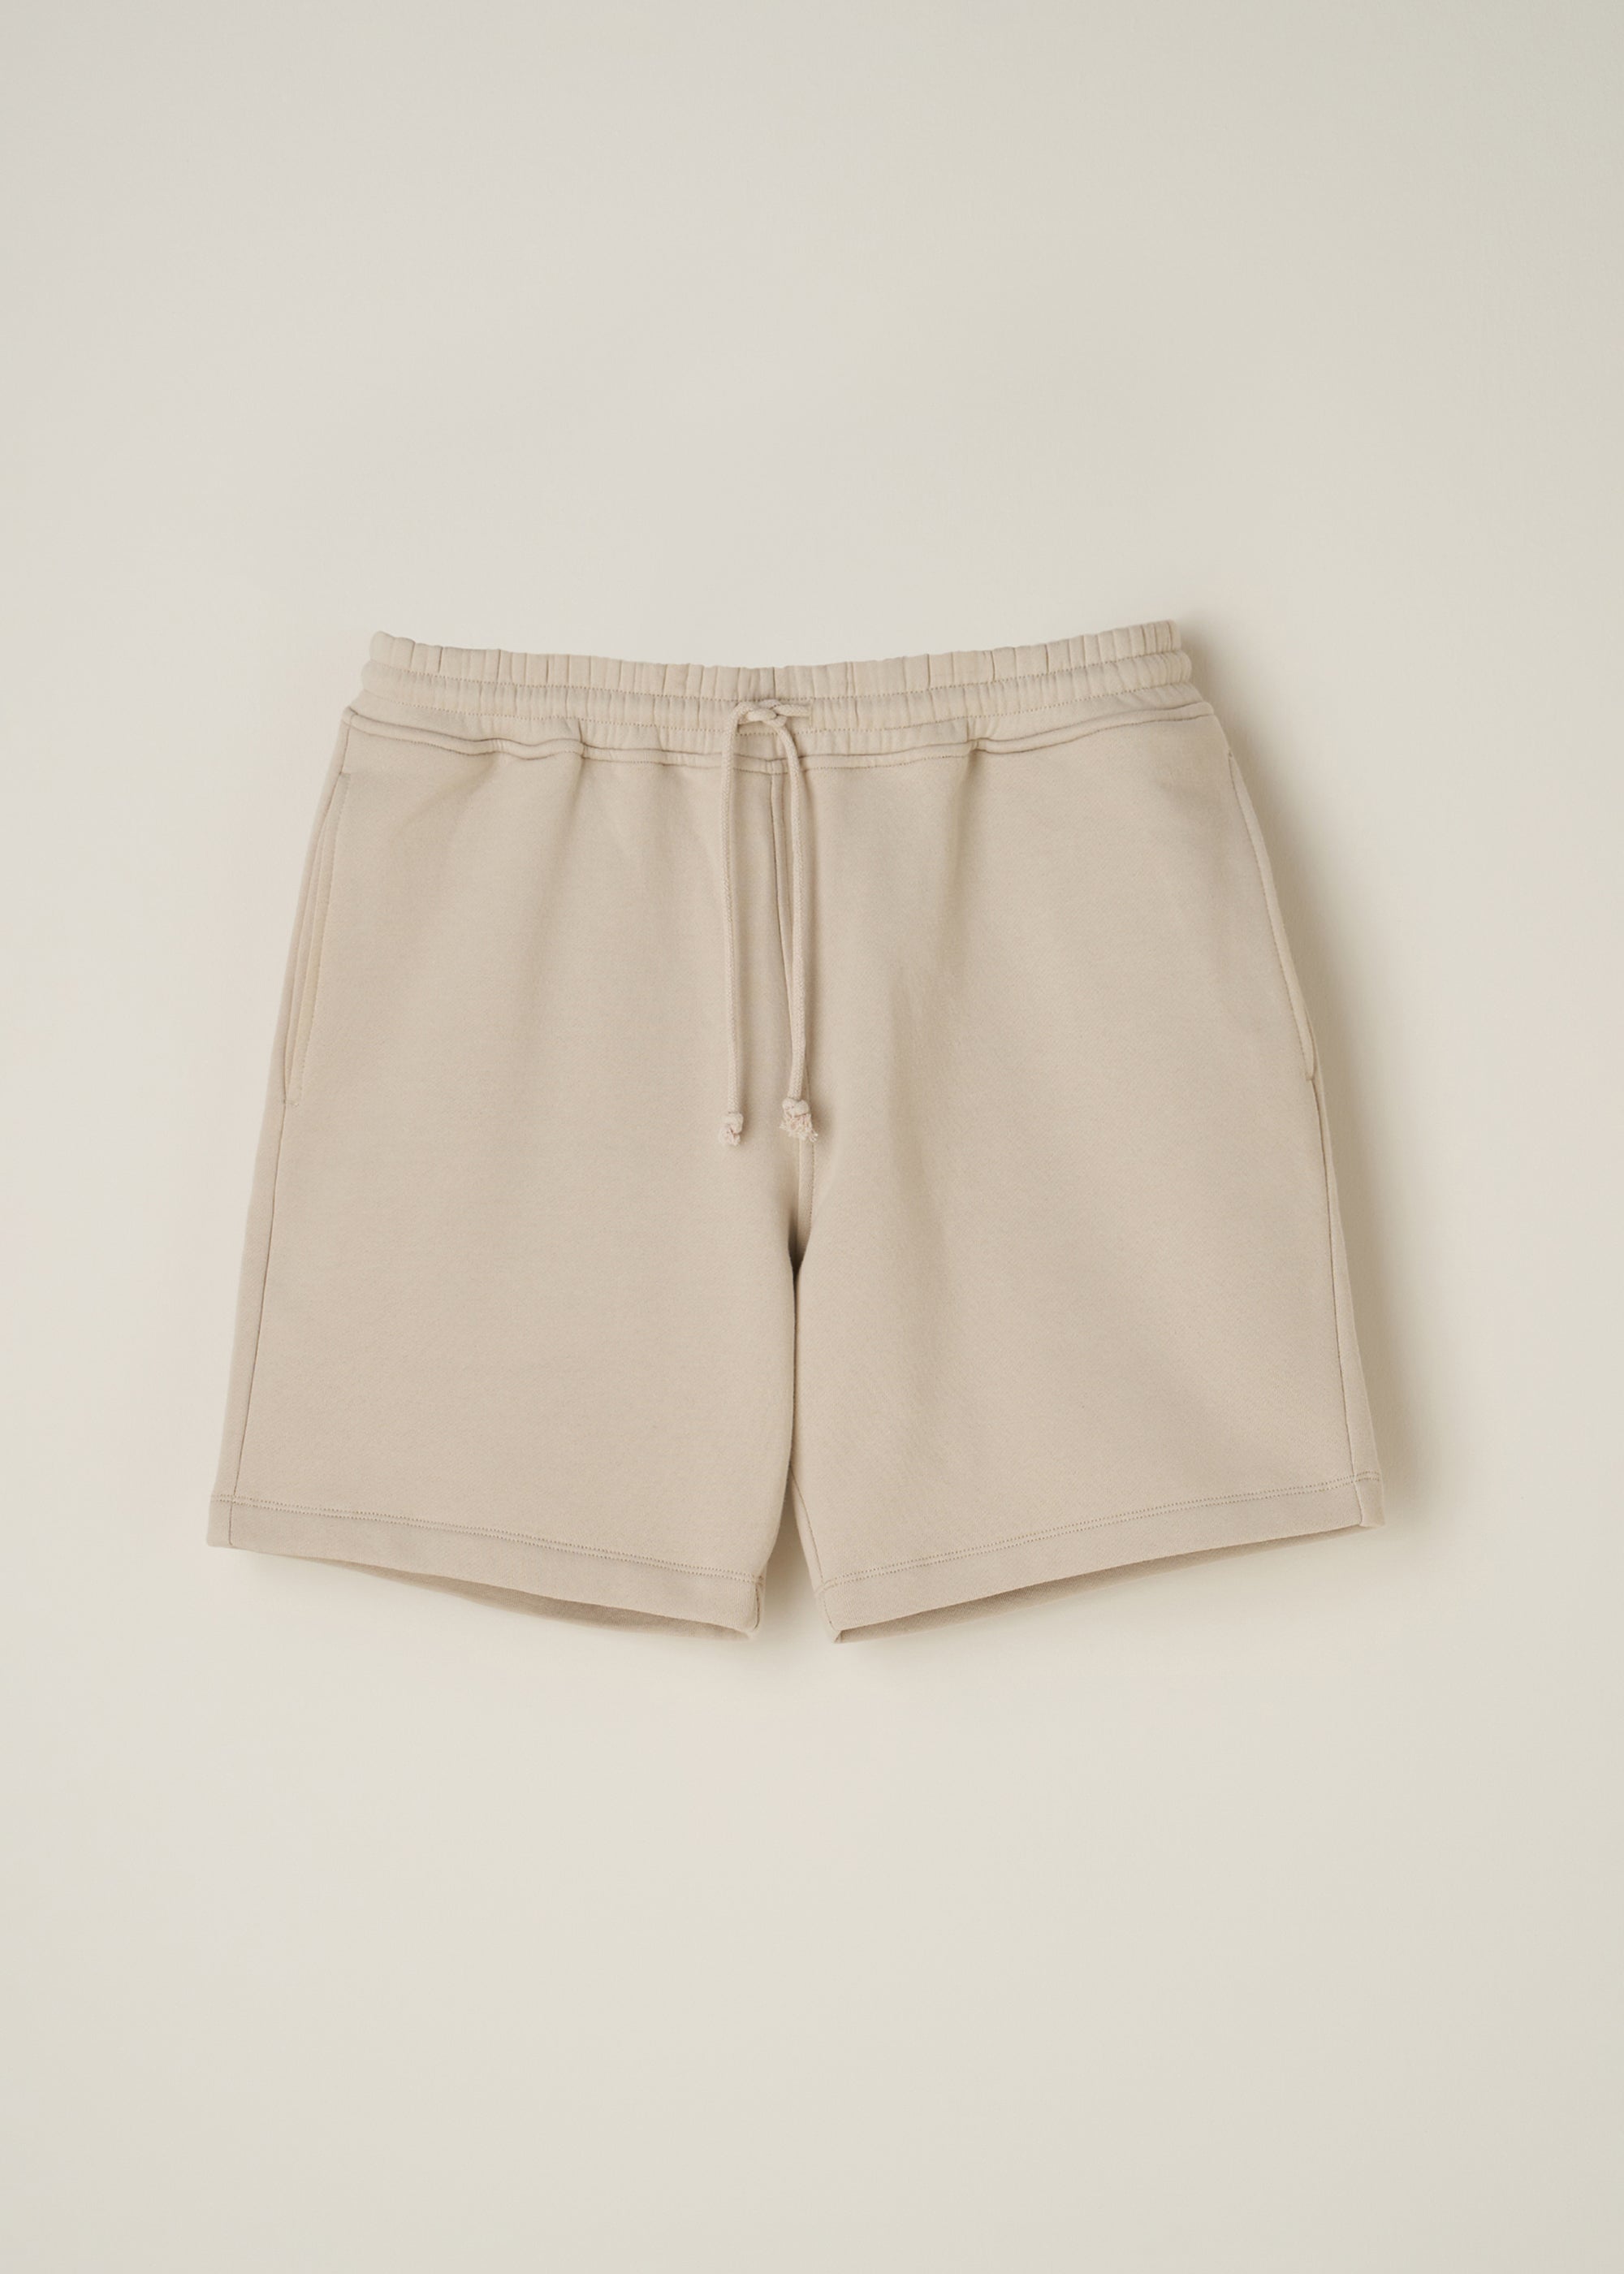 Greige Cotton Shorts, Mens Loungewear